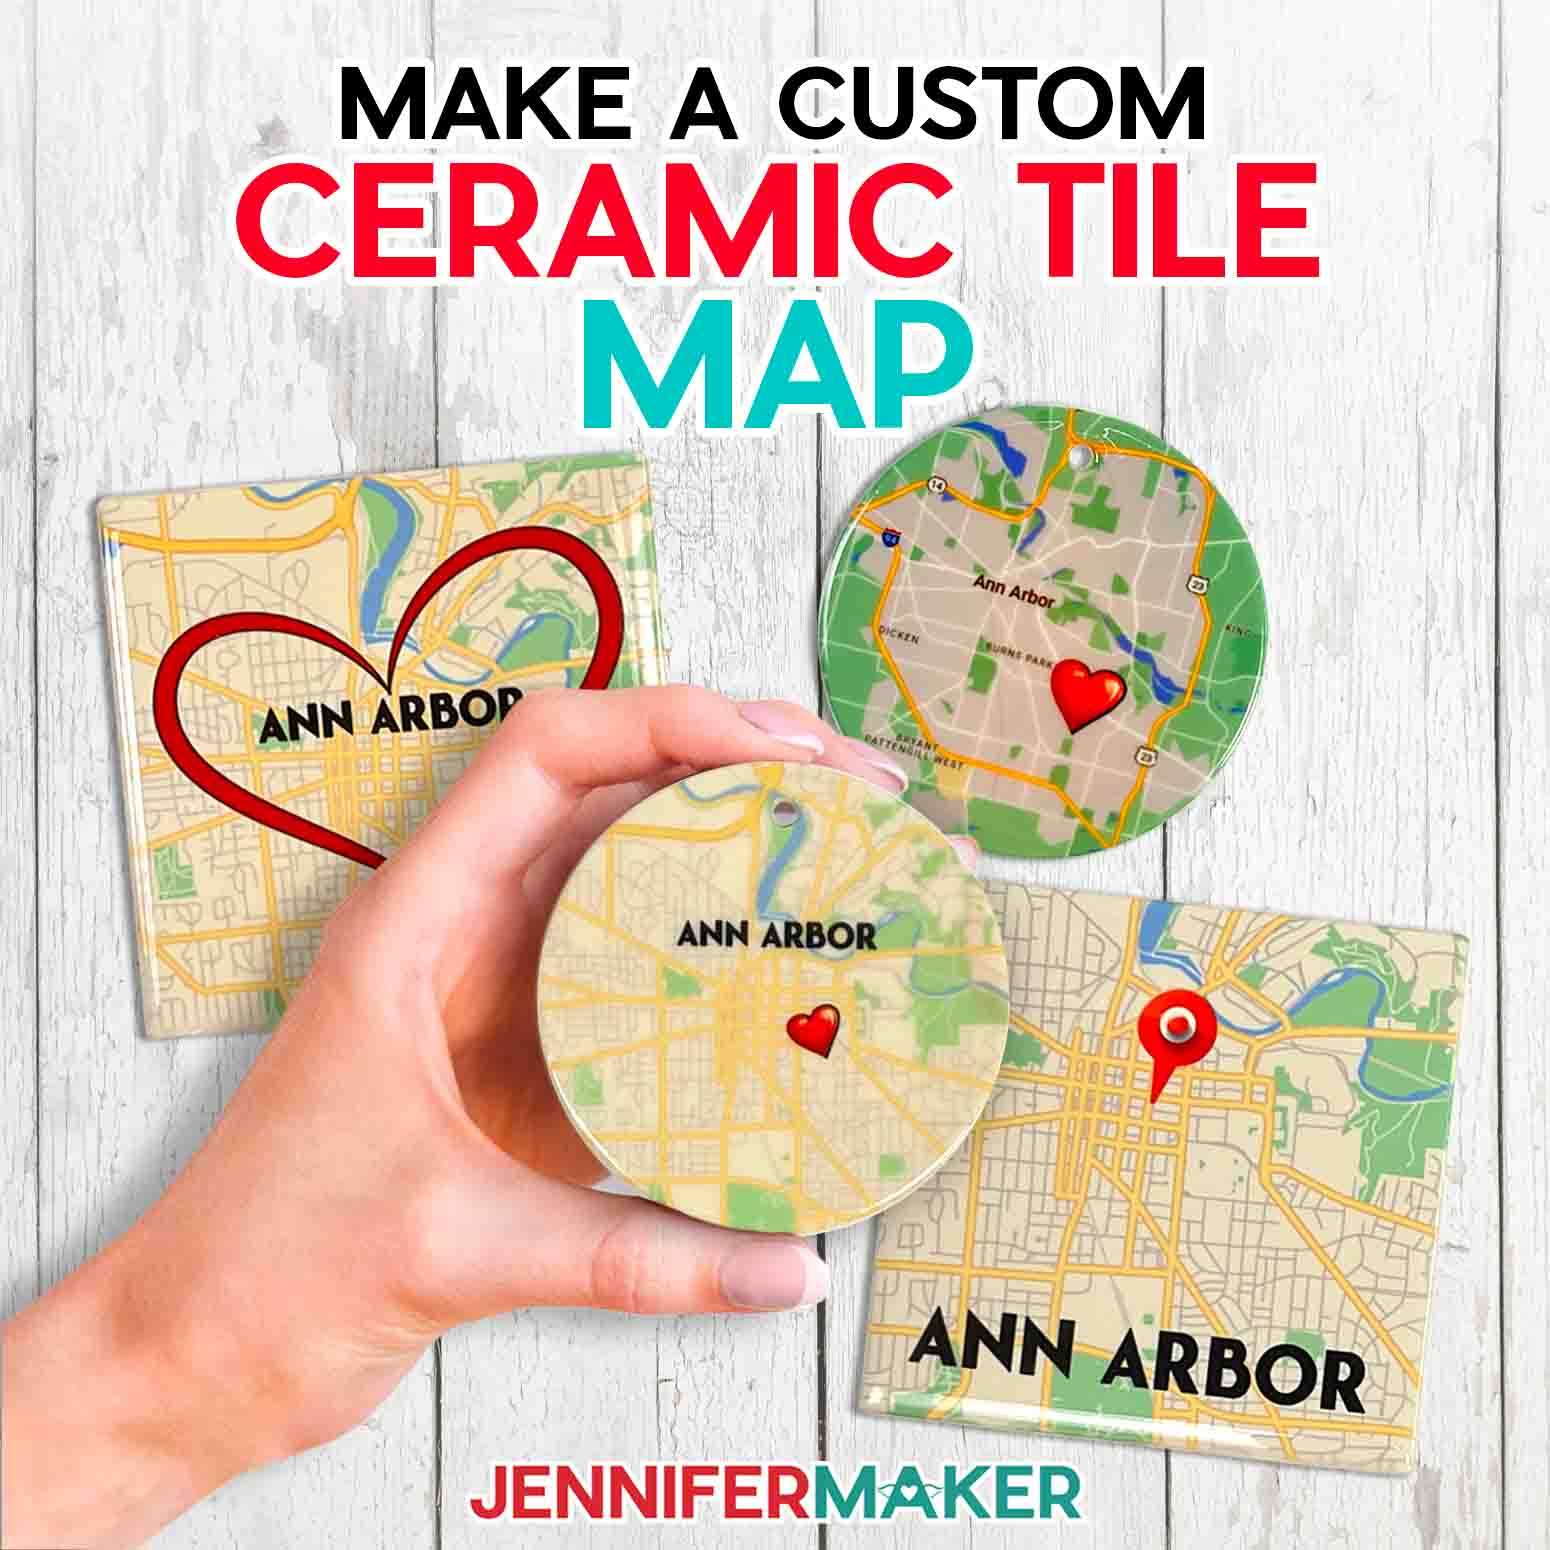 Sublimate a Ceramic Tile Map for a Custom Keepsake